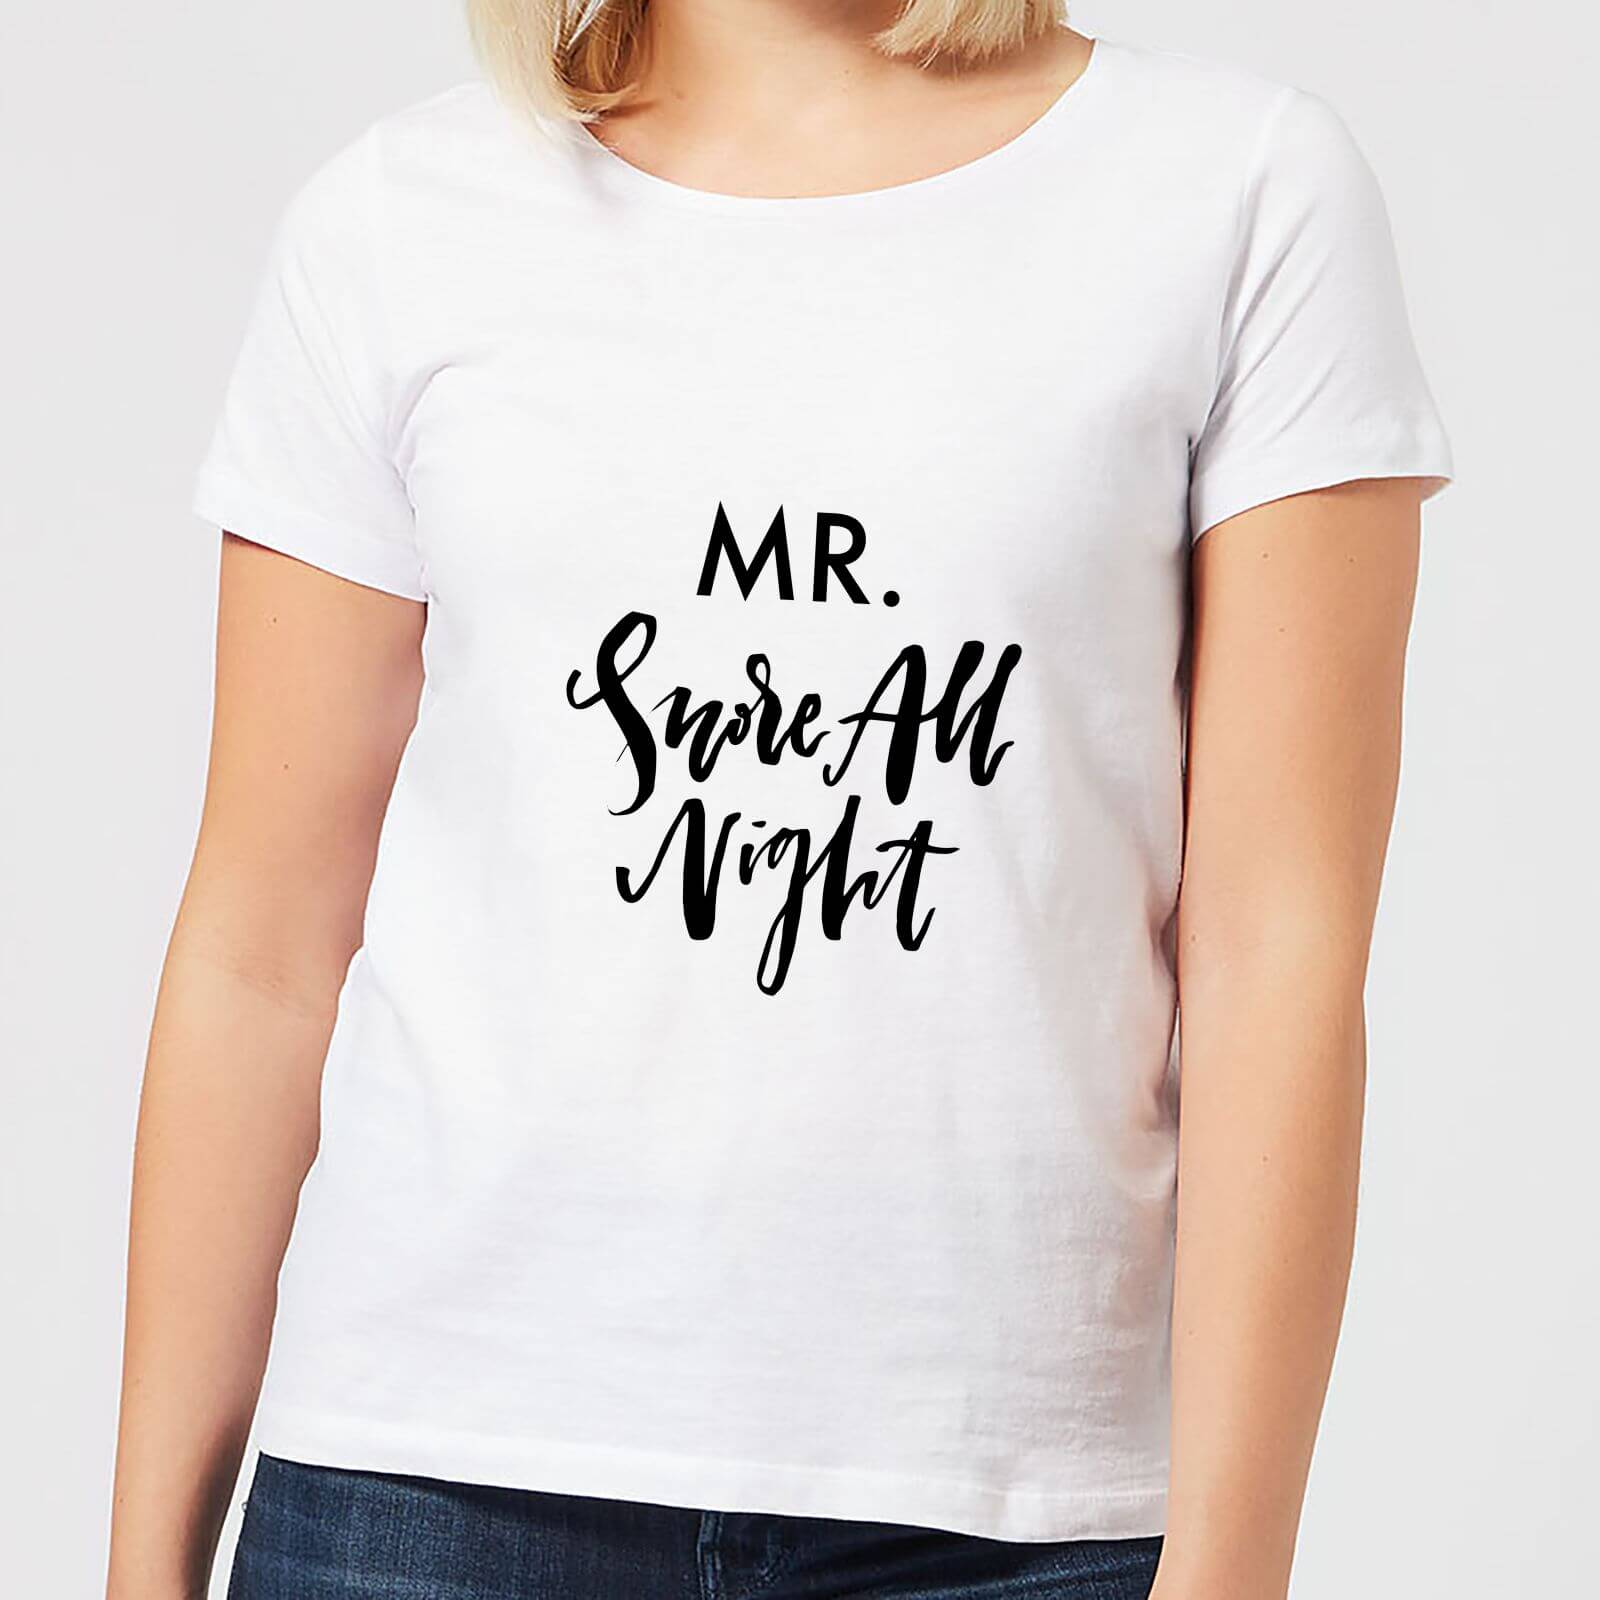 Mr. Snore All Night Women's T-Shirt - White - S - White